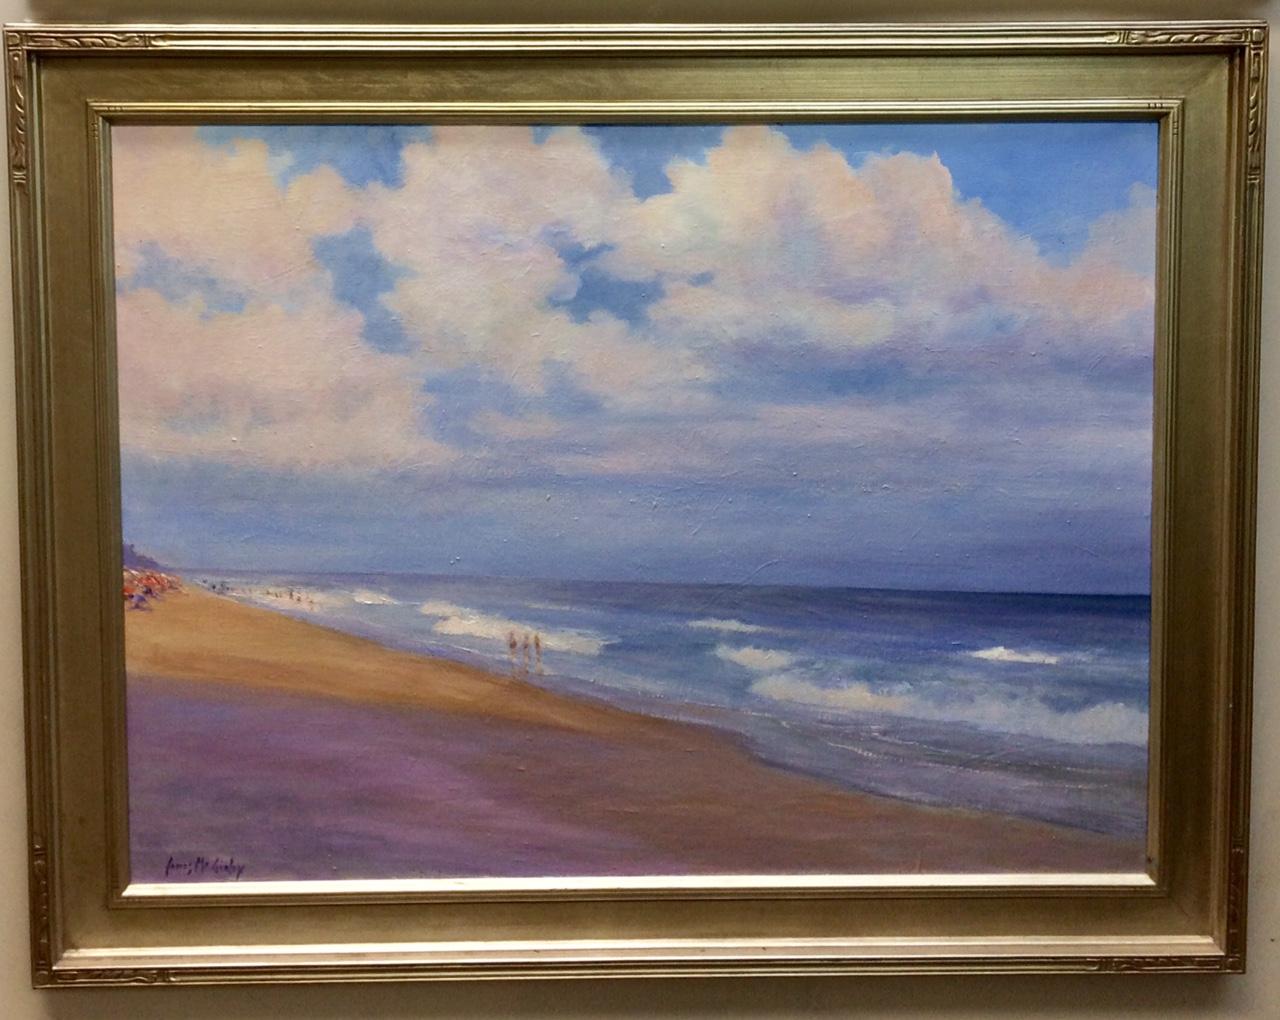 James McGinley Figurative Painting - A Walk on the Beach, original 30x40 contemporary landscape